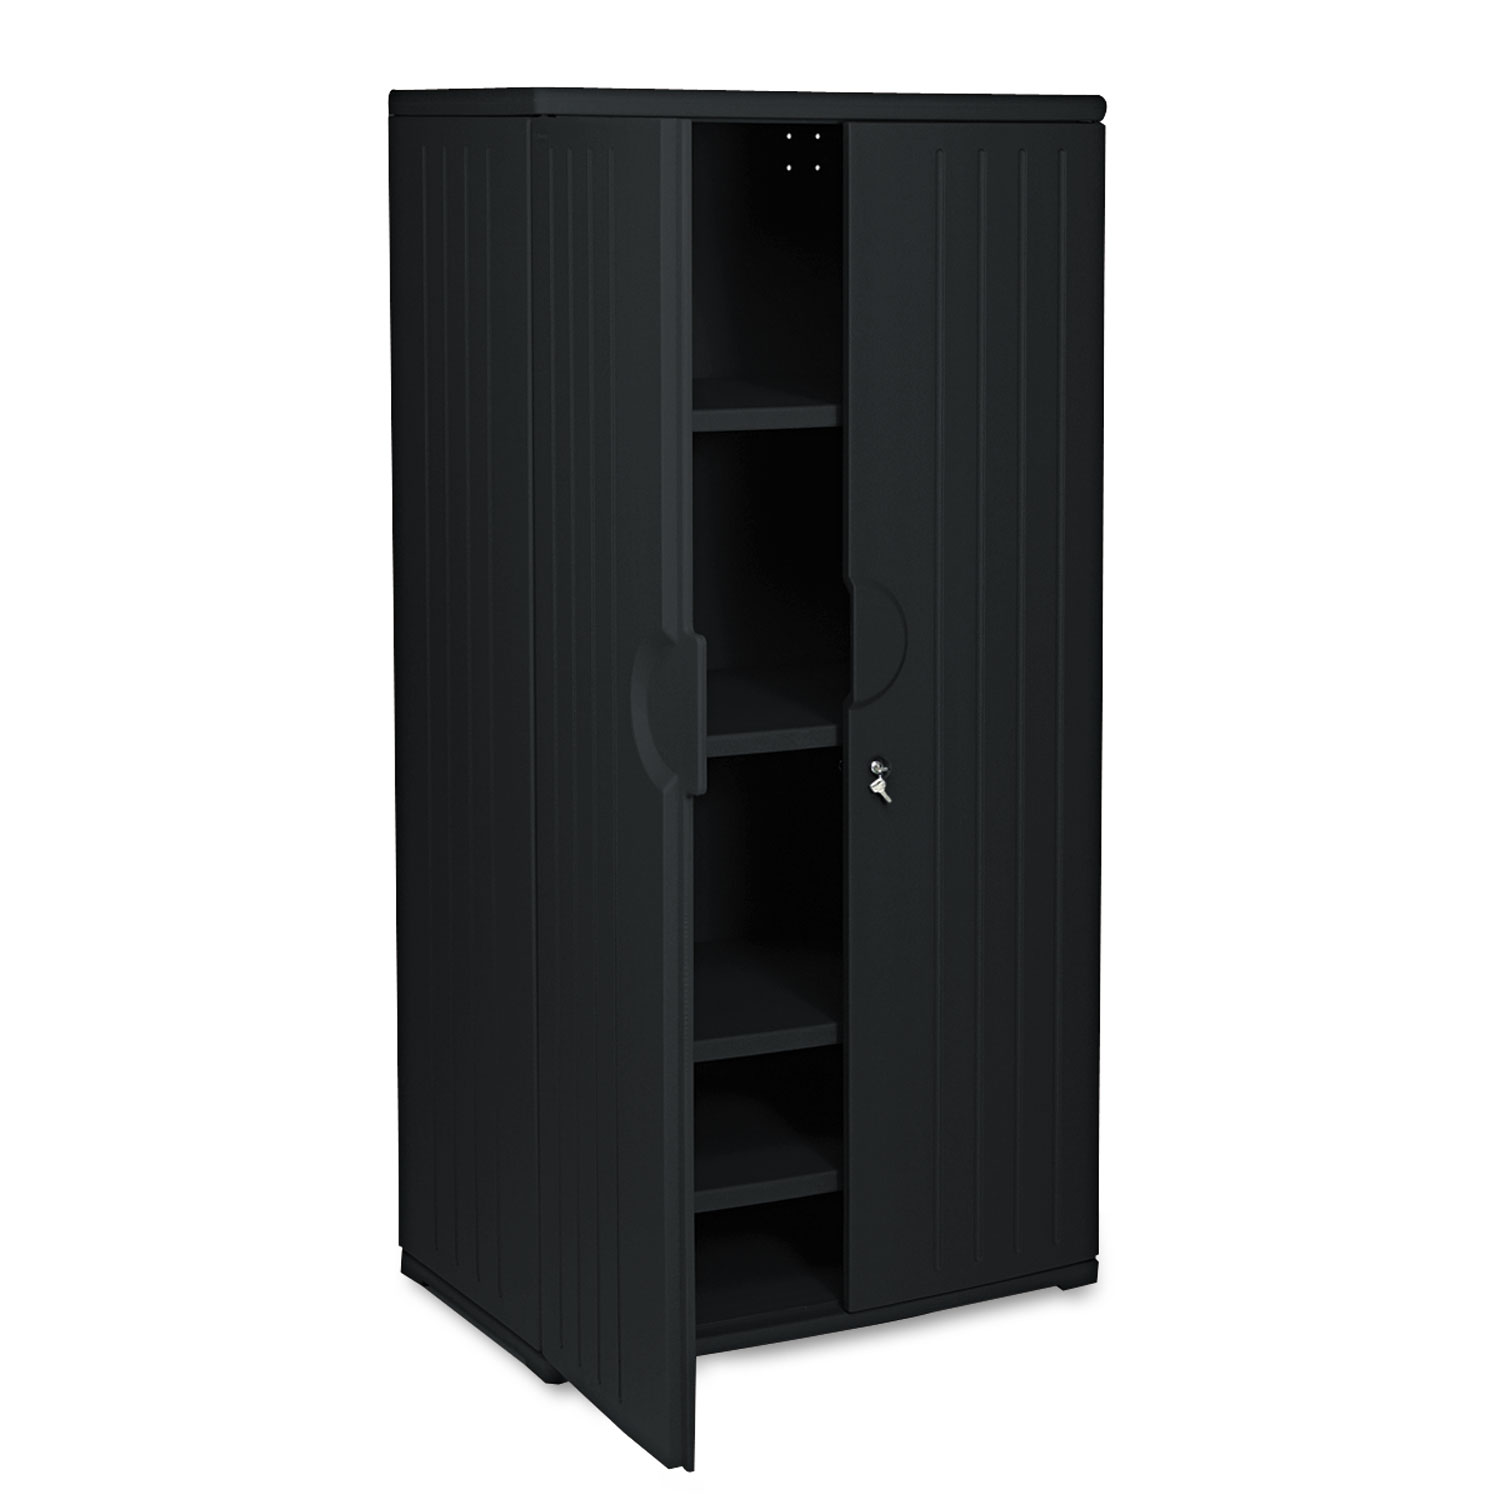  Iceberg 92571 OfficeWorks Resin Storage Cabinet, 36w x 22d x 72h, Black (ICE92571) 